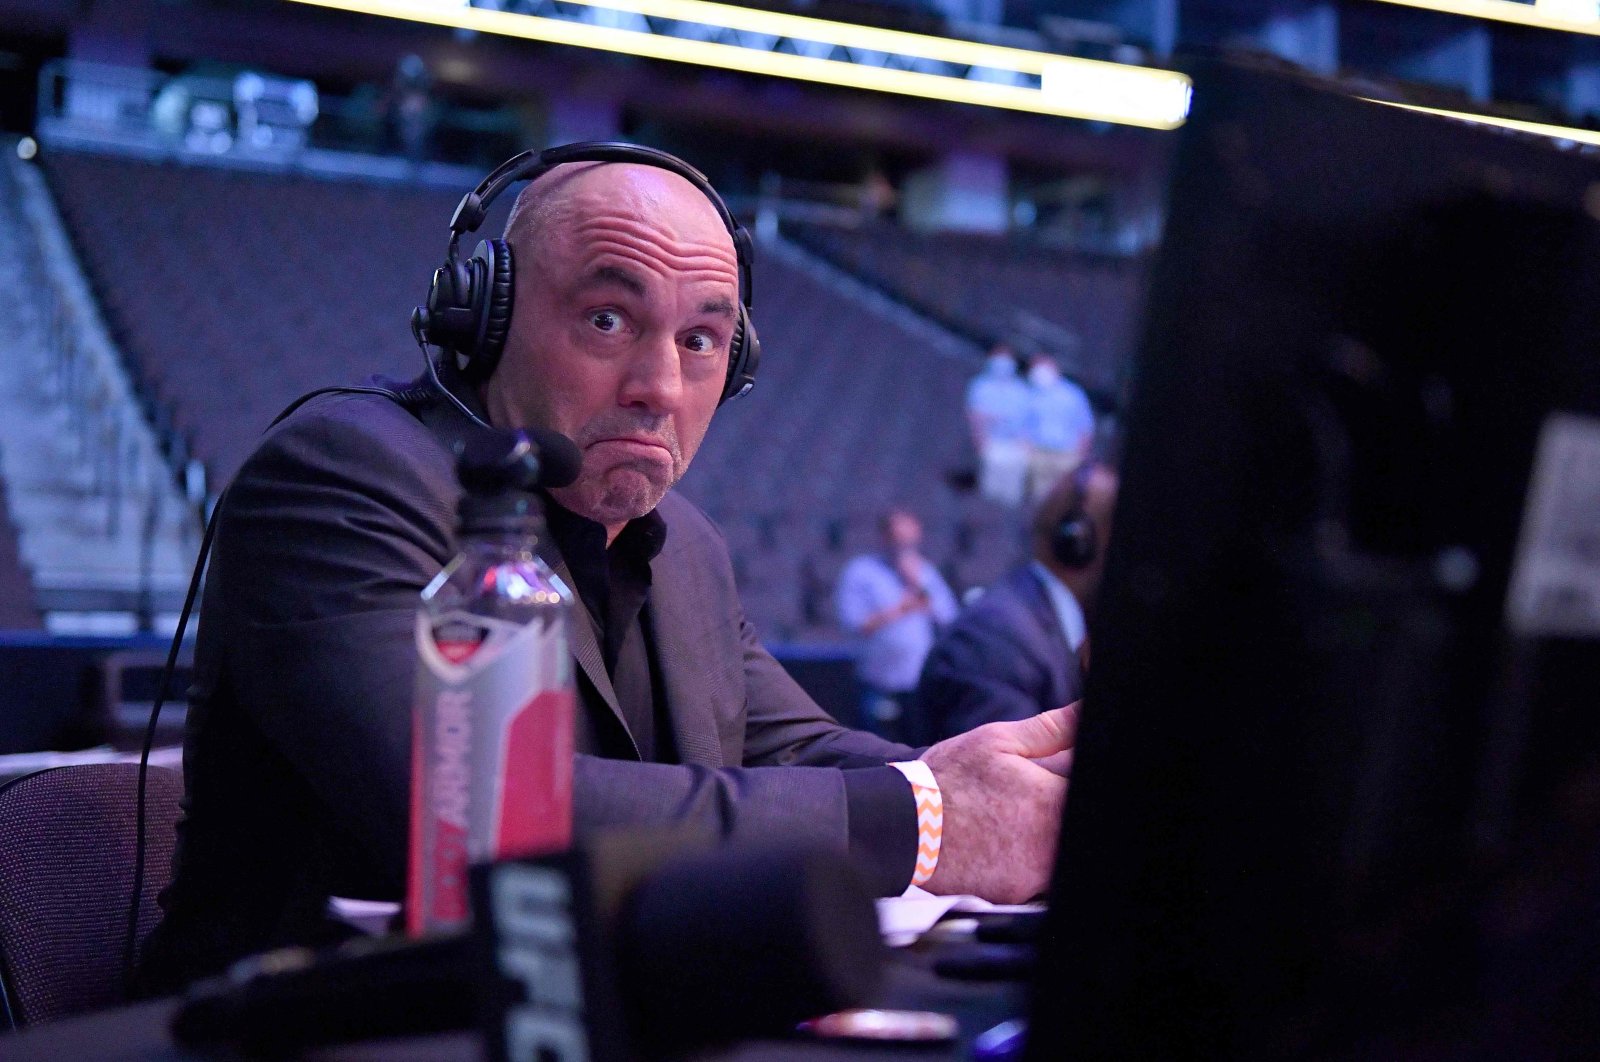 Joe Rogan reacts during UFC 249 at VyStar Veterans Memorial Arena in Jacksonville, Florida, U.S., May 9, 2020. (AFP Photo)